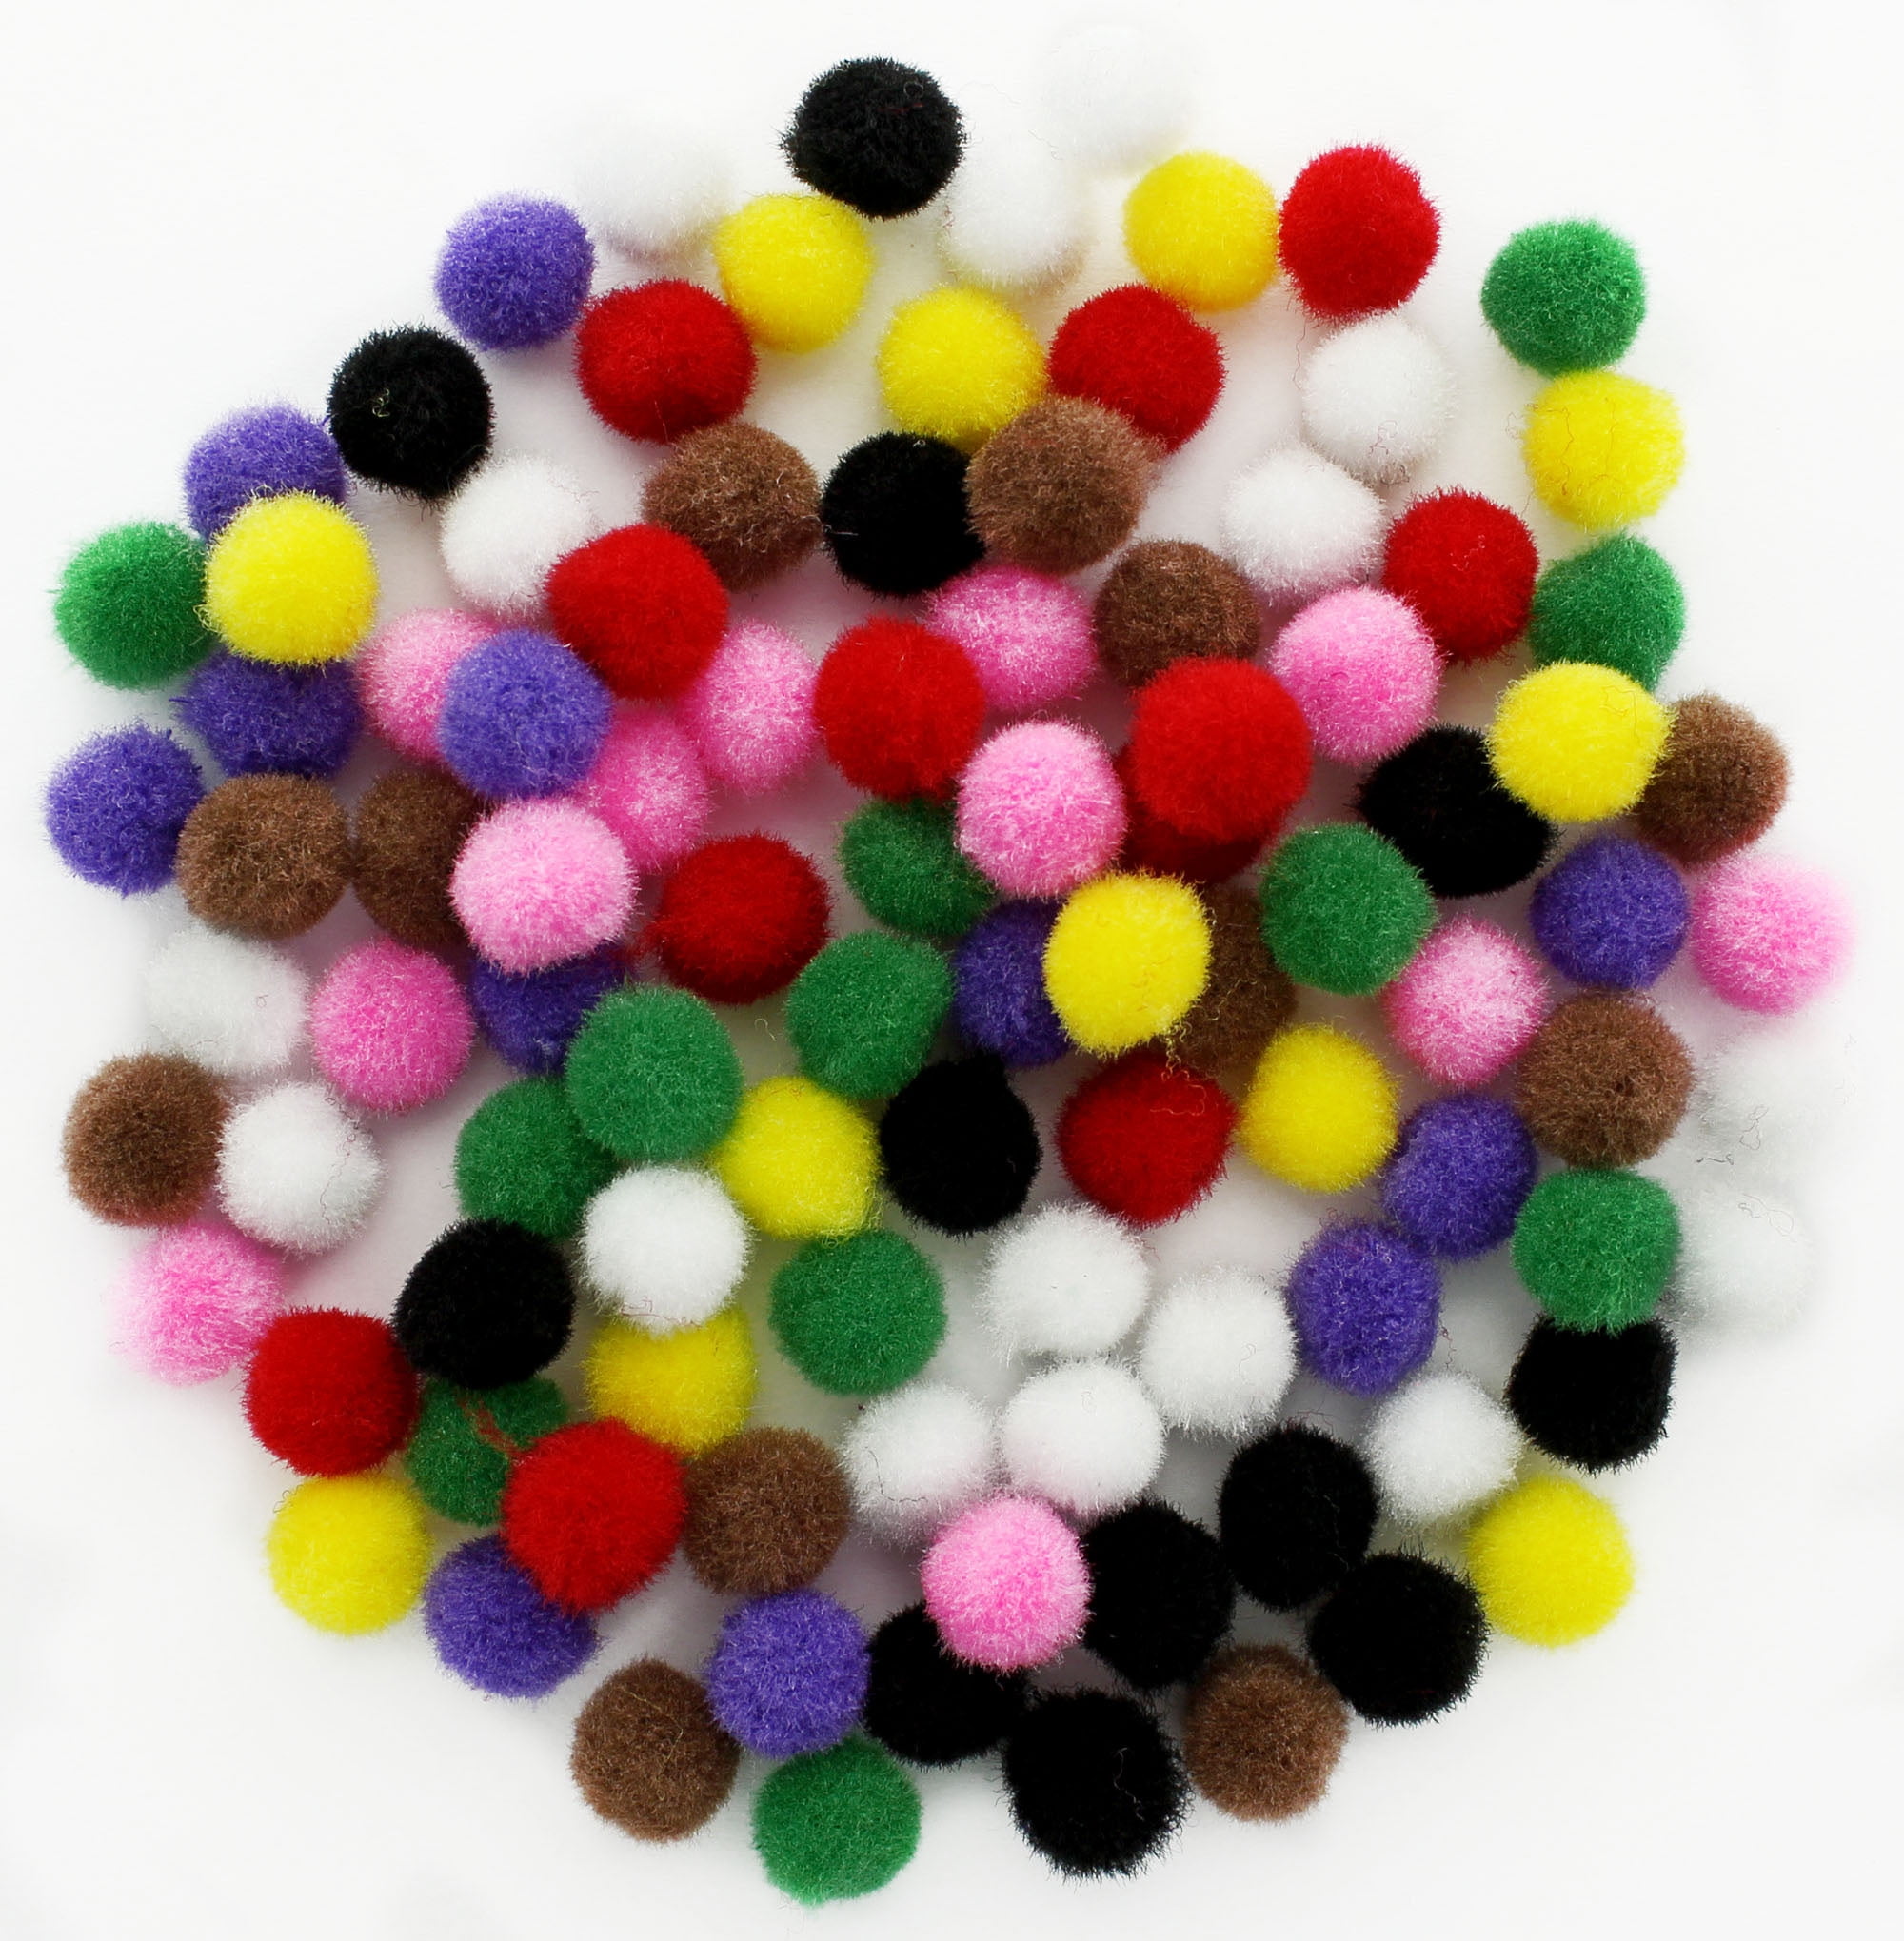 [250 Pcs ] 150 1 inch Black Craft Pom Poms + 100 Multicolor Pom Pom Balls,  Small Pom Poms Assorted Pompoms for Crafts Projects and DIY Creative Crafts